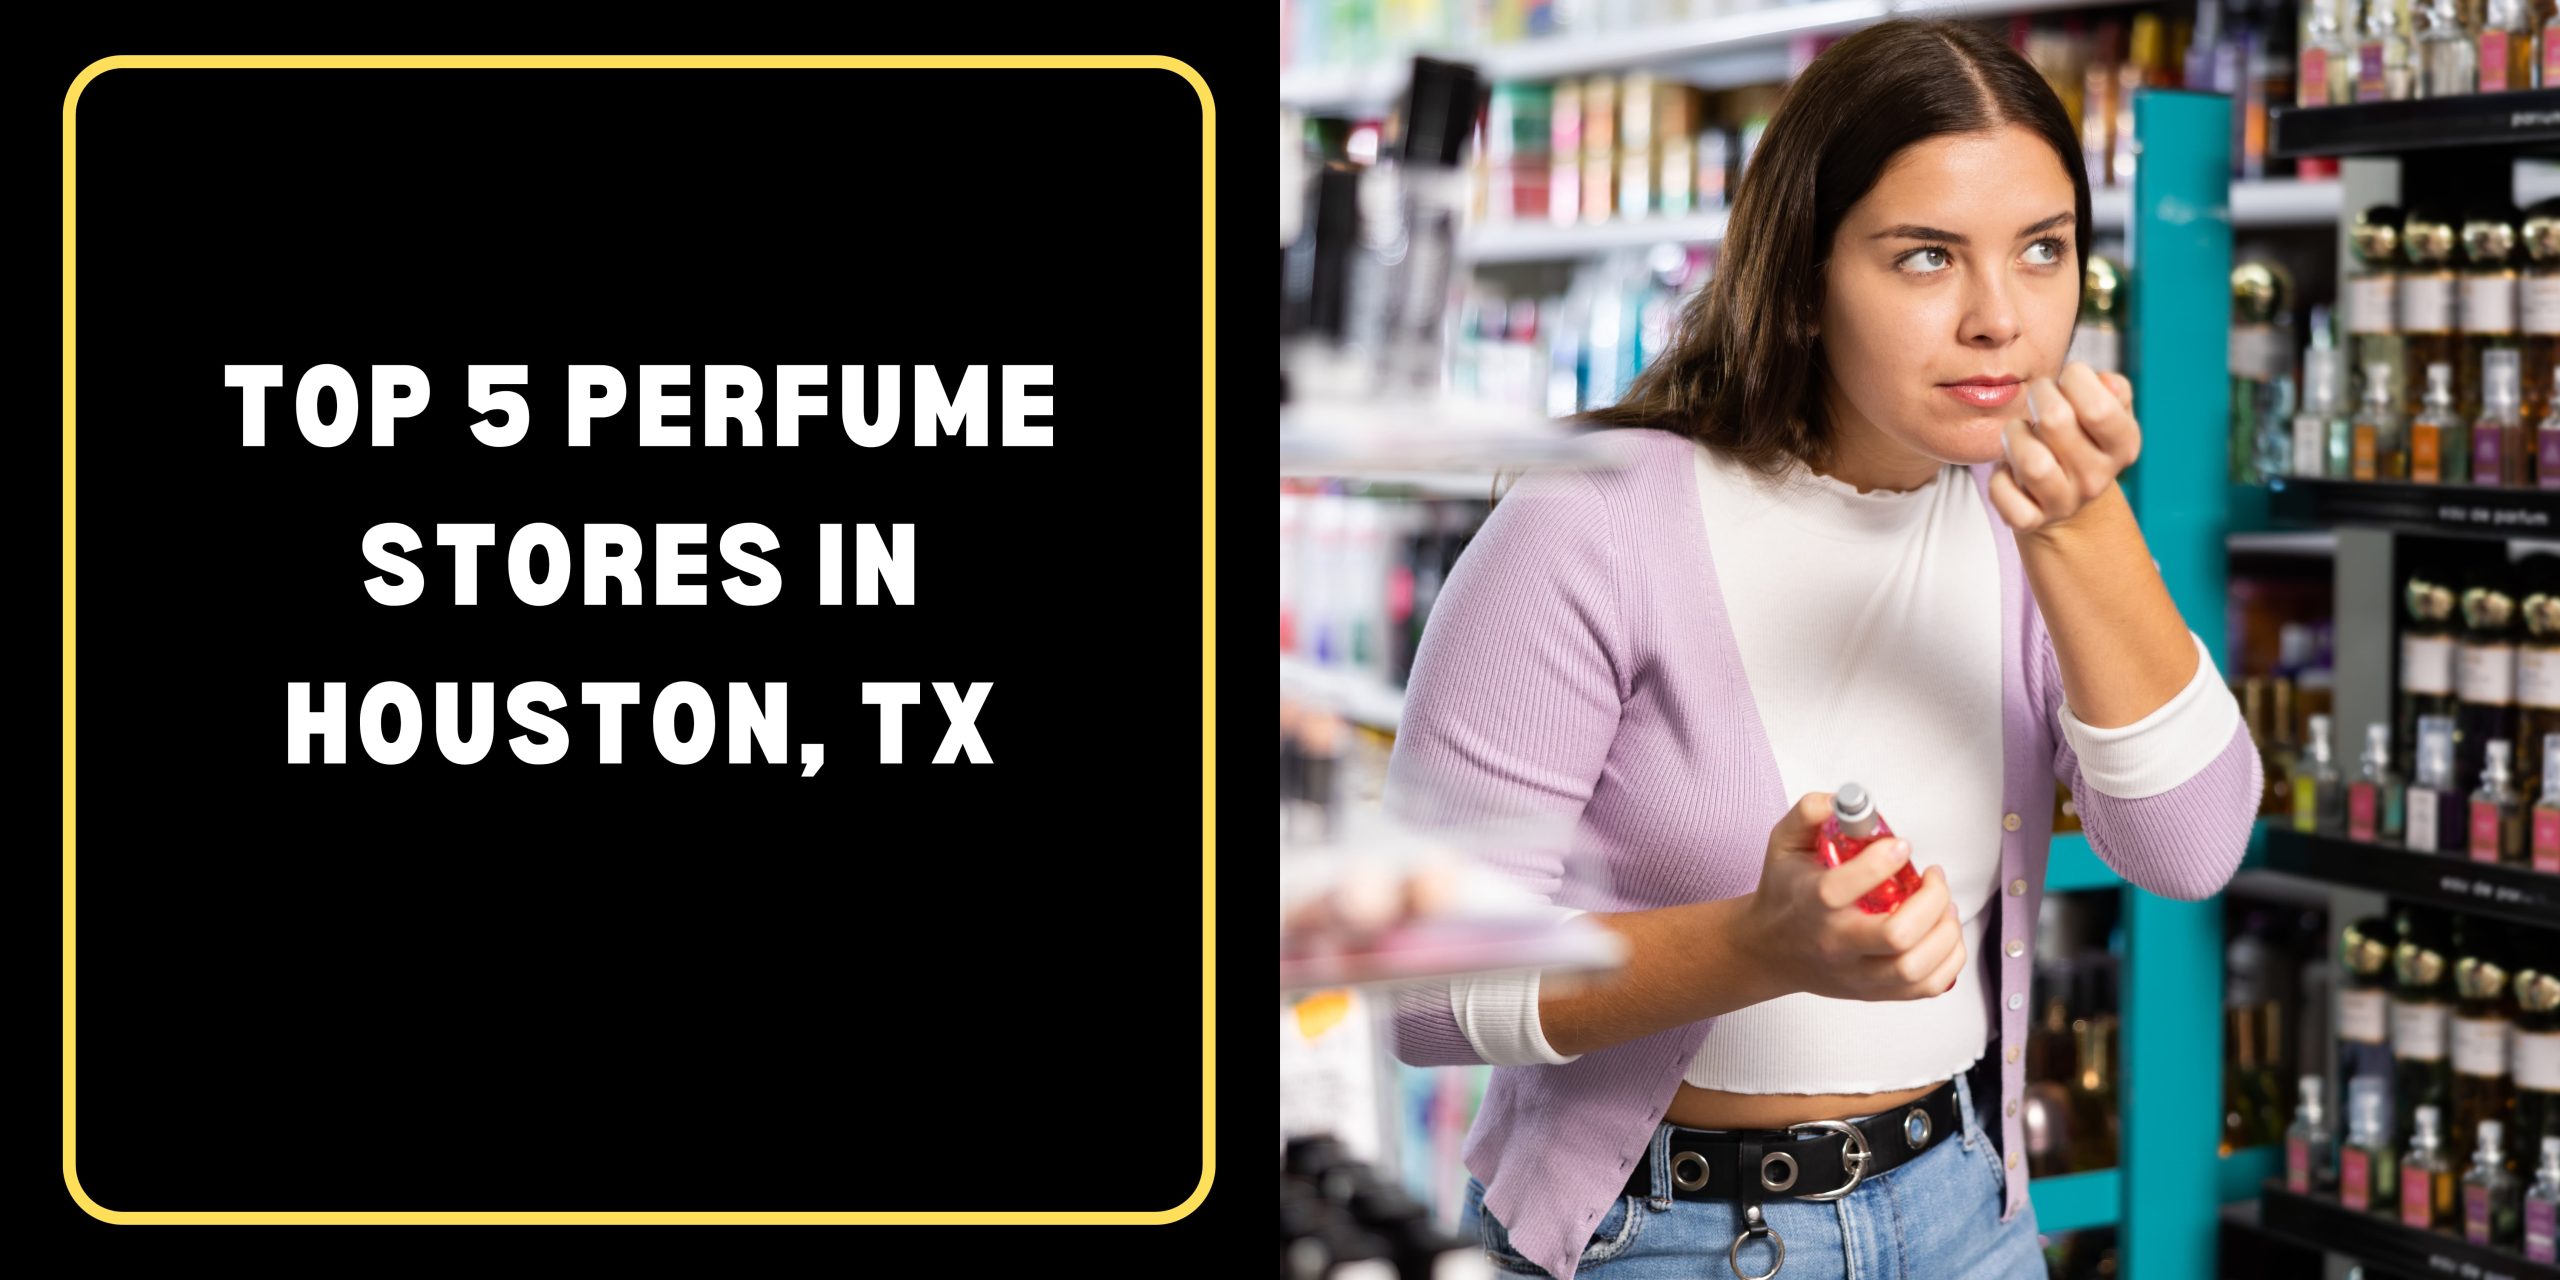 Top 5 Perfume Stores in Houston Tx